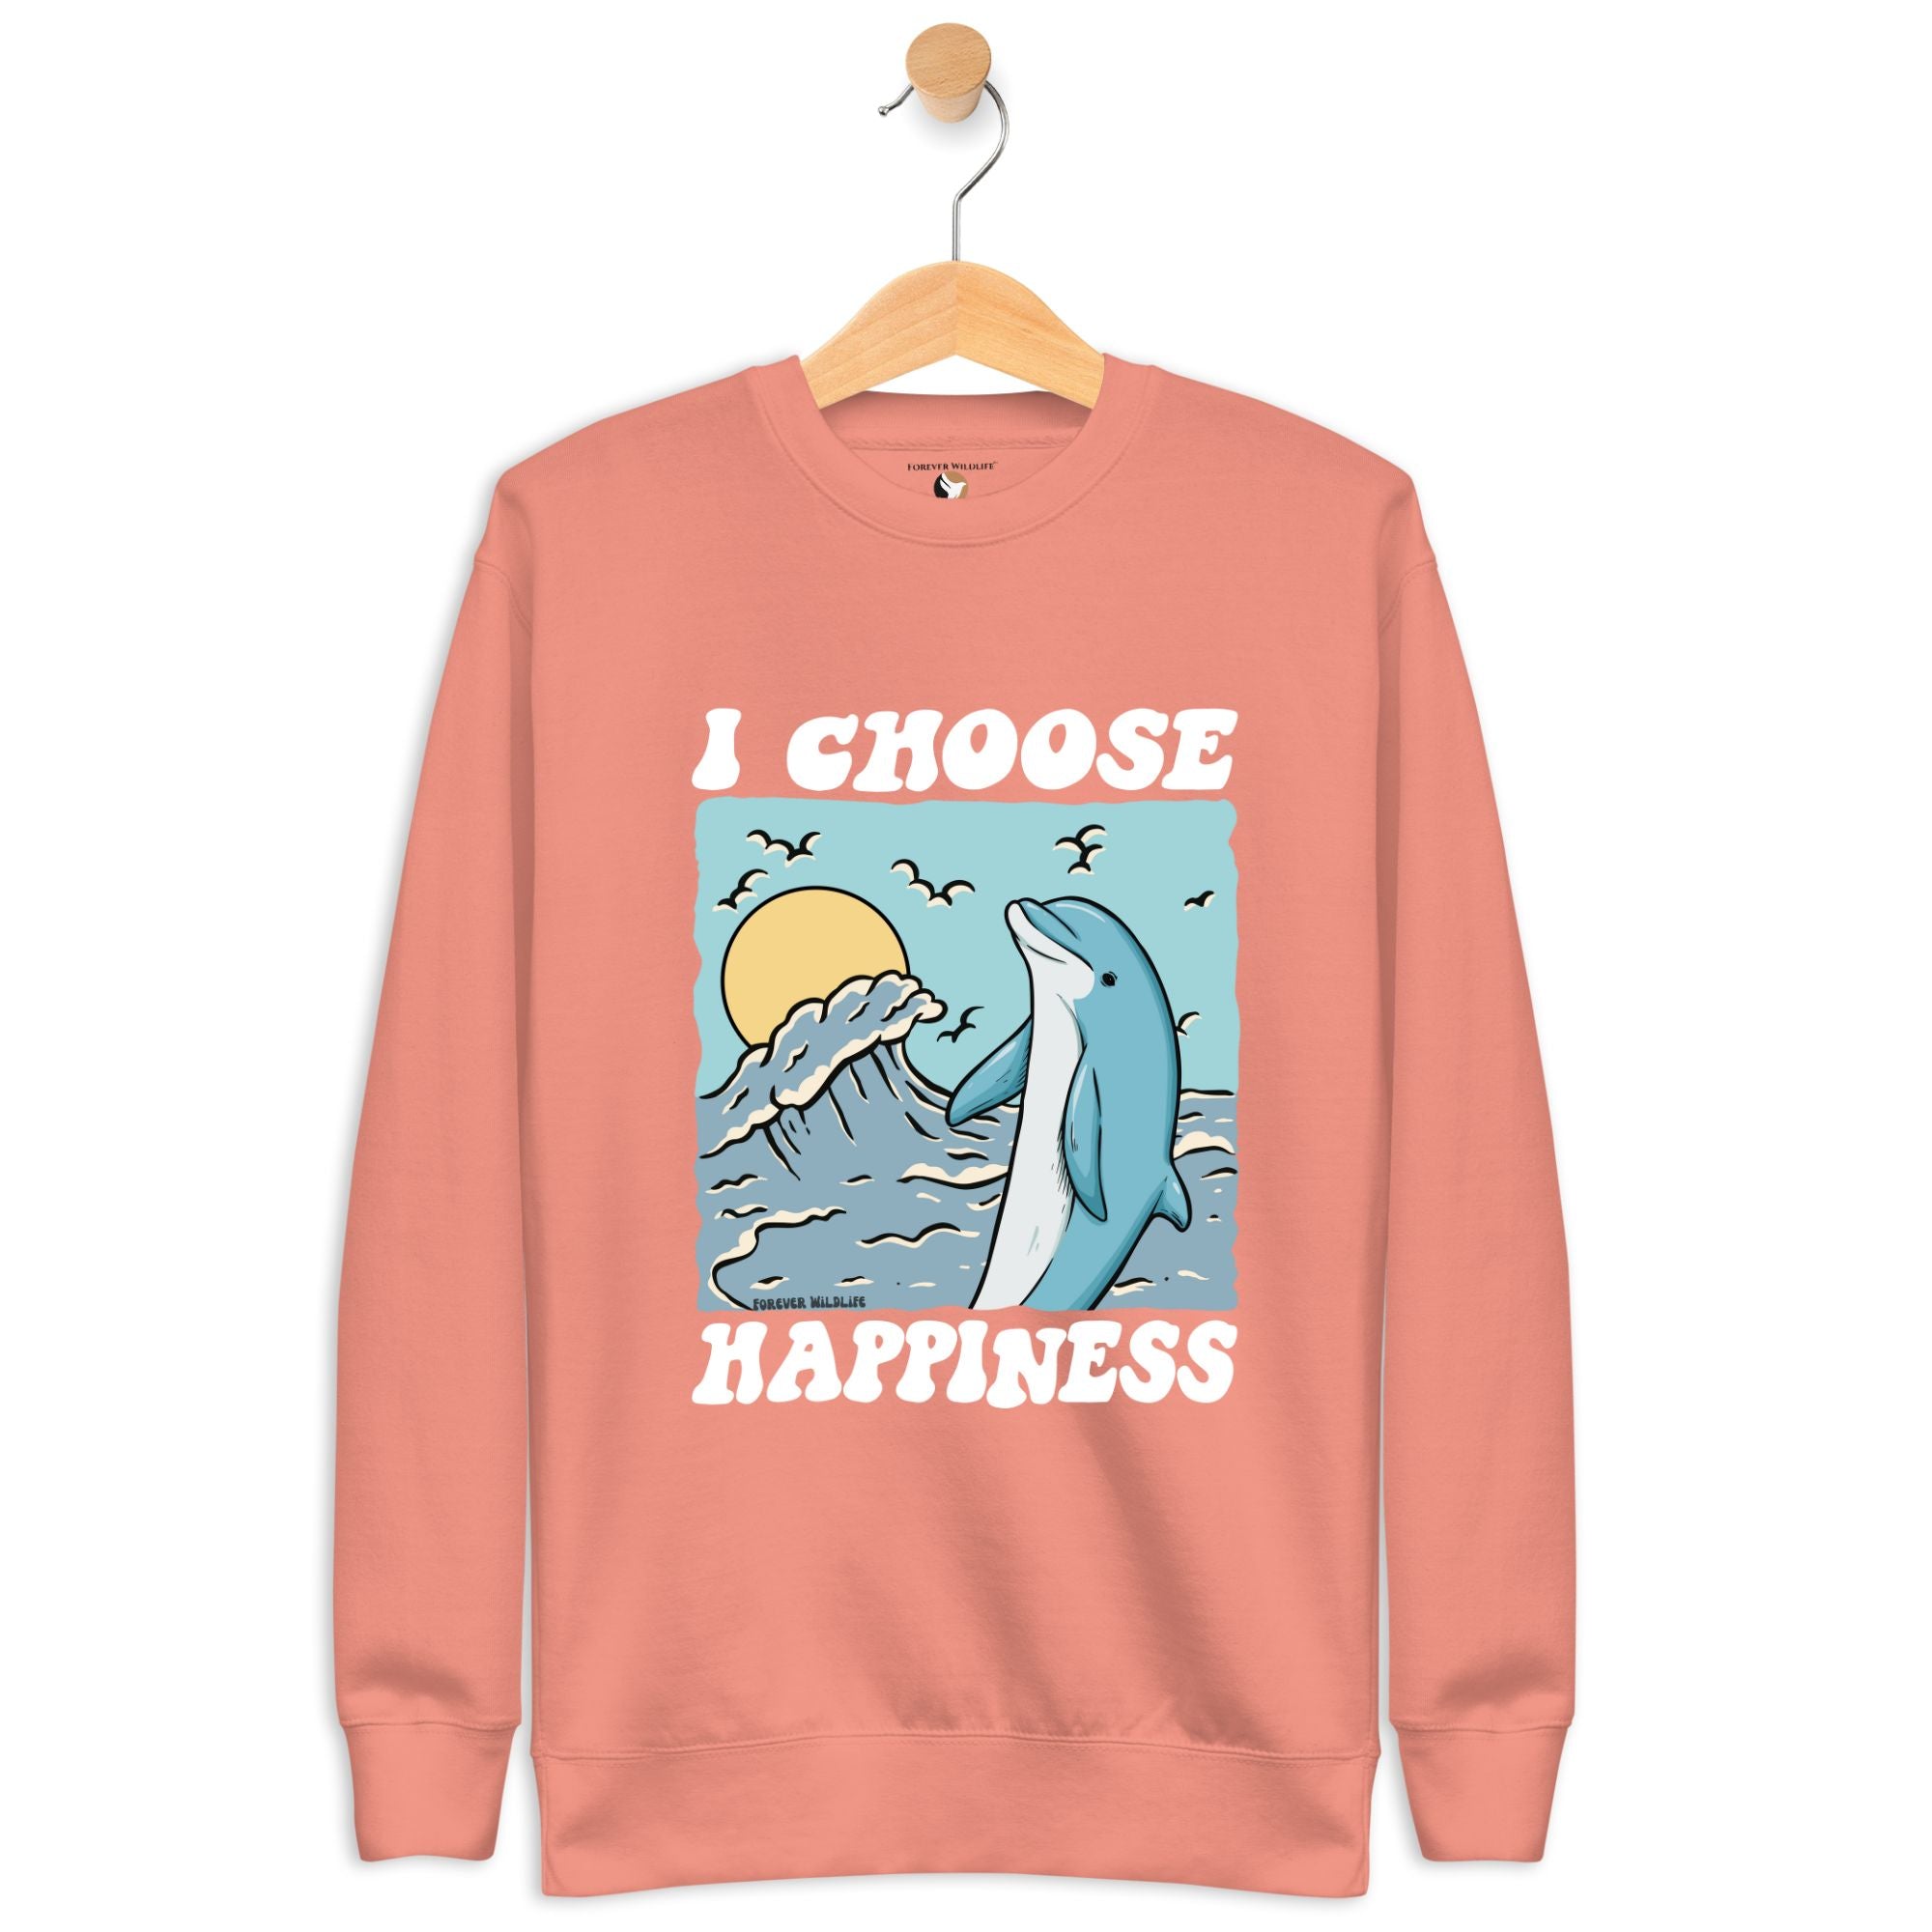 Dolphin Sweatshirt in Rose-Premium Wildlife Animal Inspiration Sweatshirt Design with 'I Choose Happiness' text, part of Wildlife Sweatshirts & Clothing from Forever Wildlife.